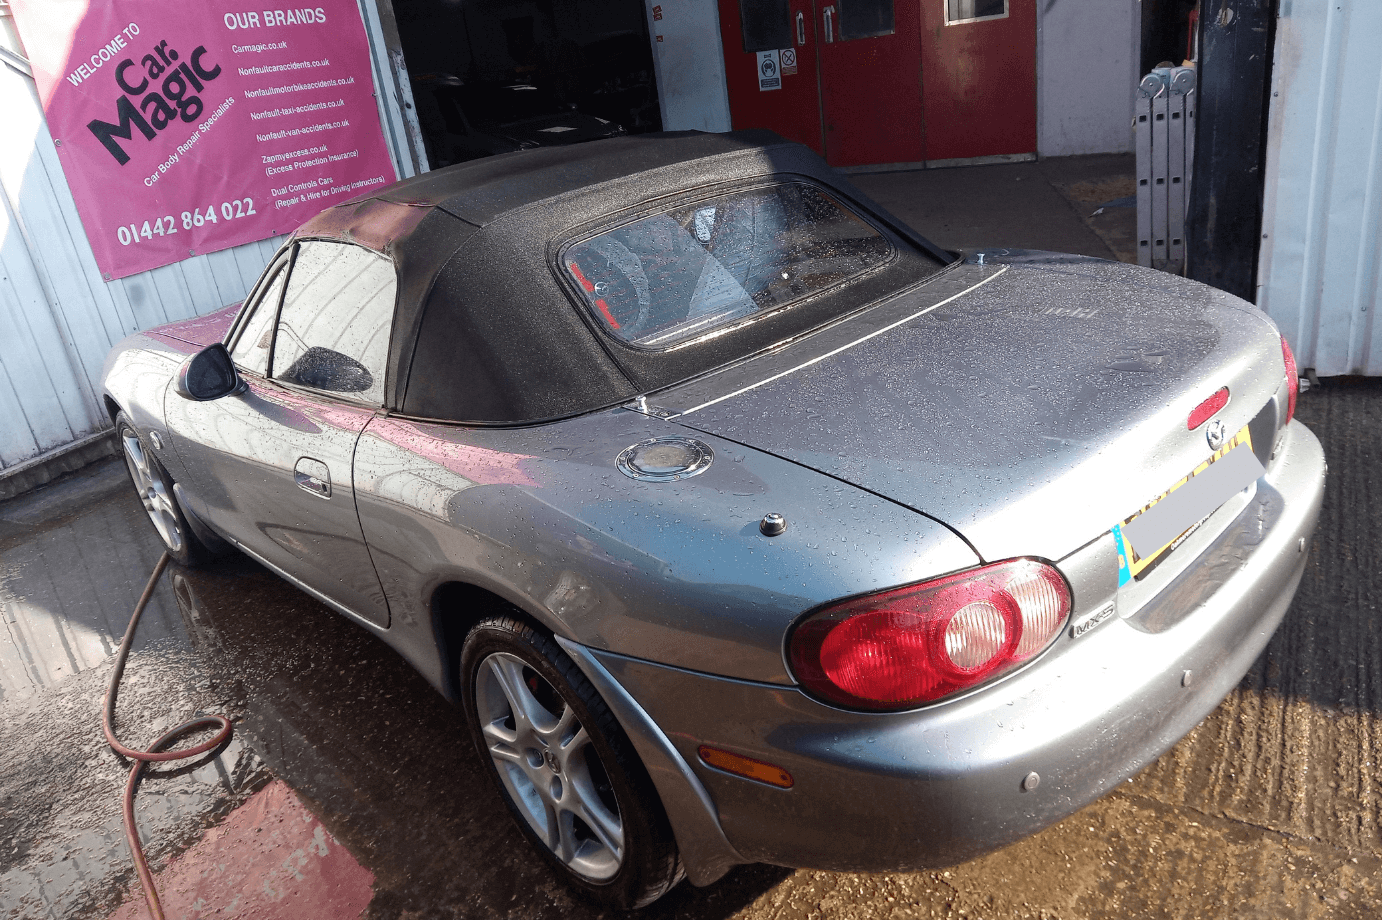 Mazda repair wash and wax